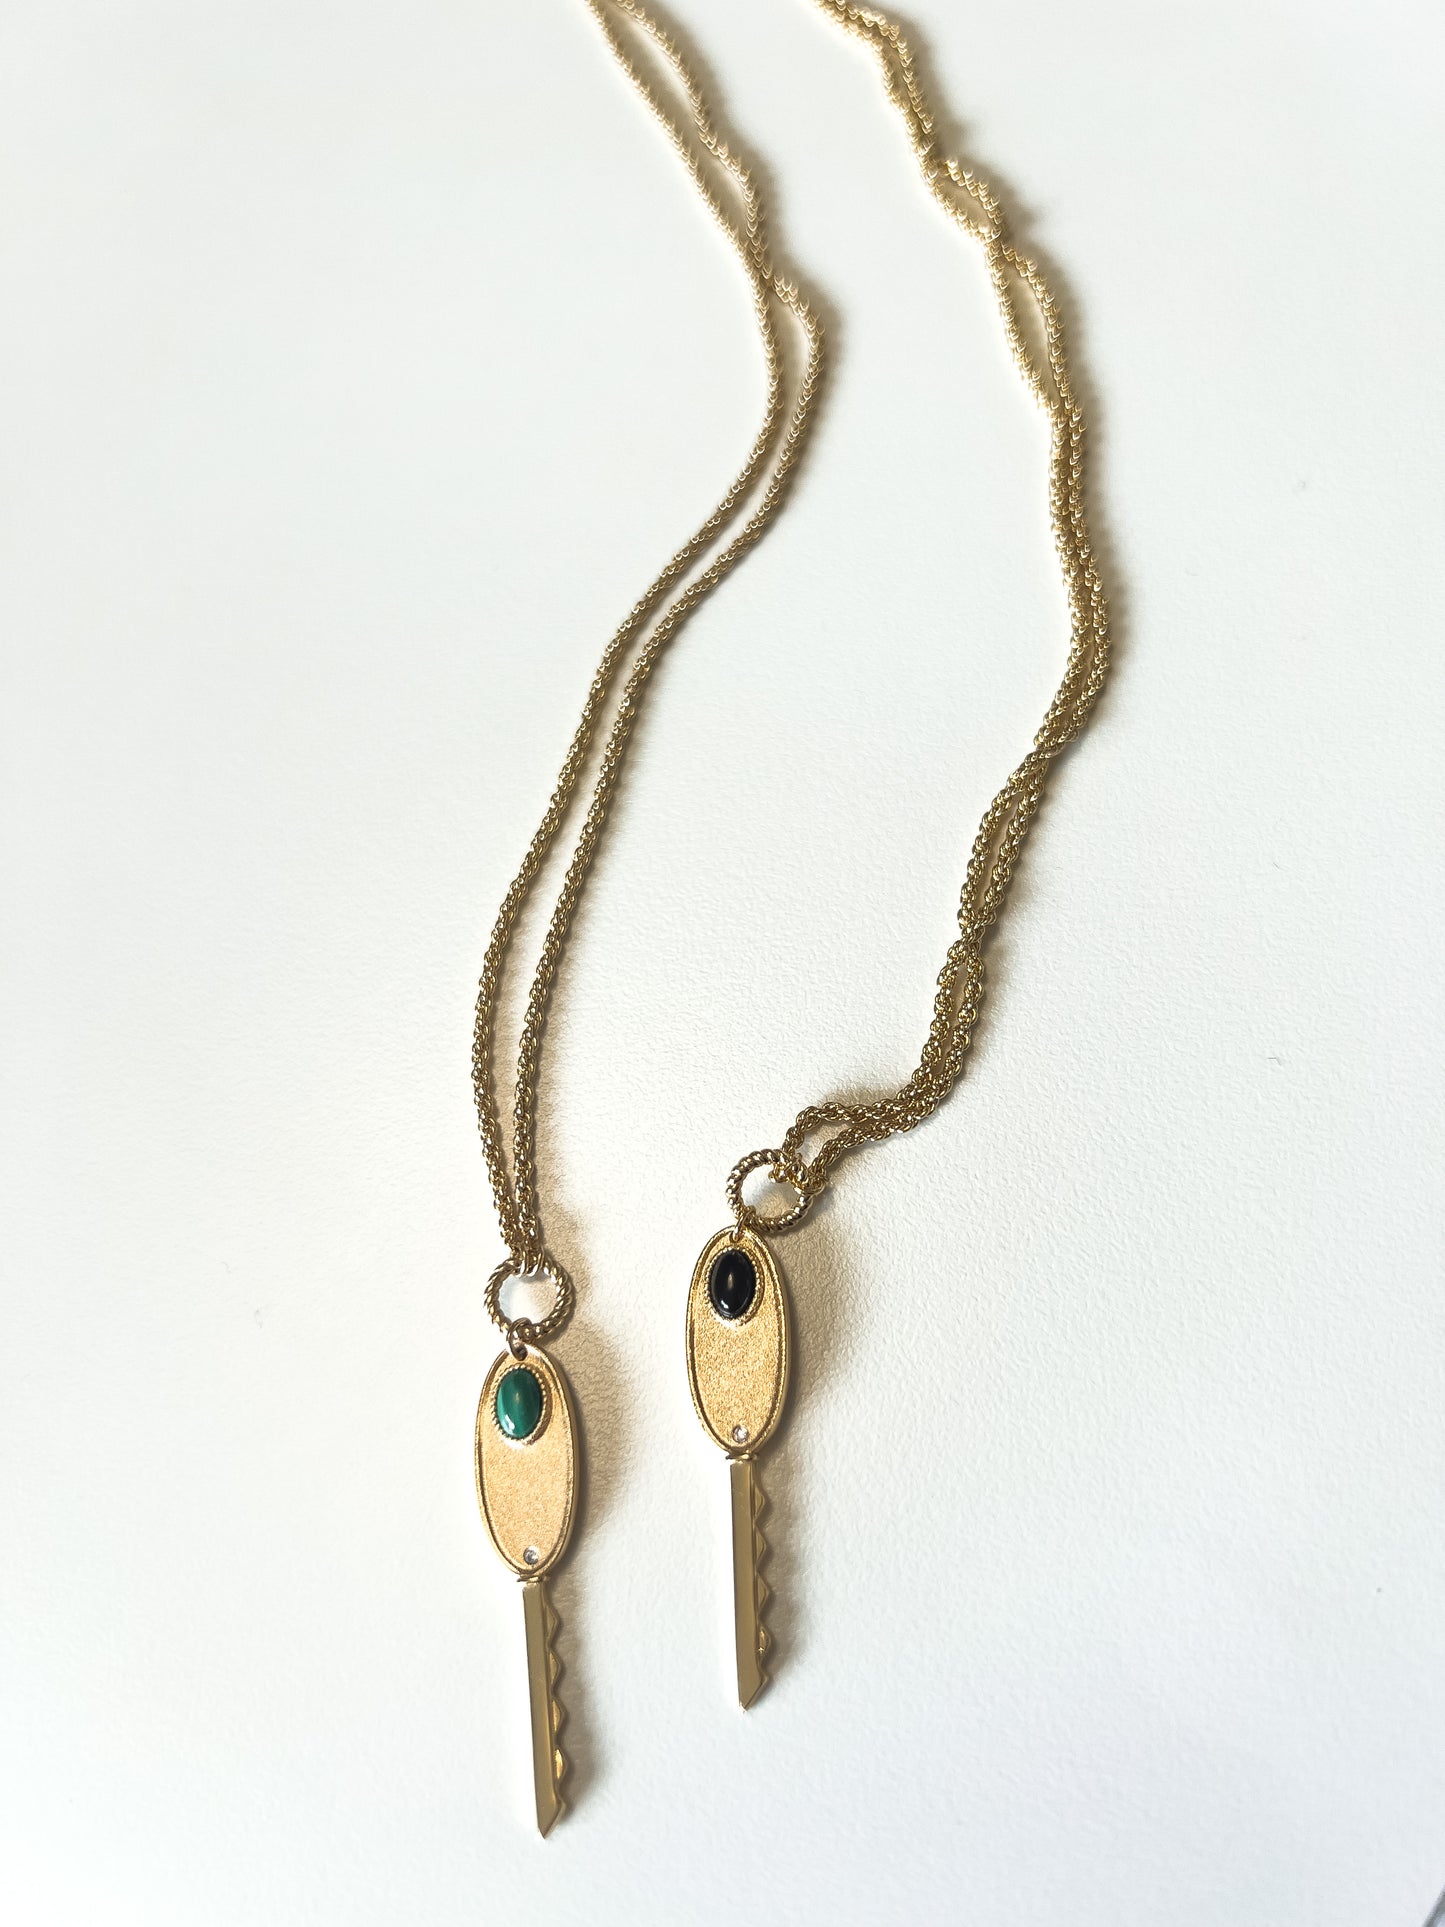 Gold Key Pendant Necklace